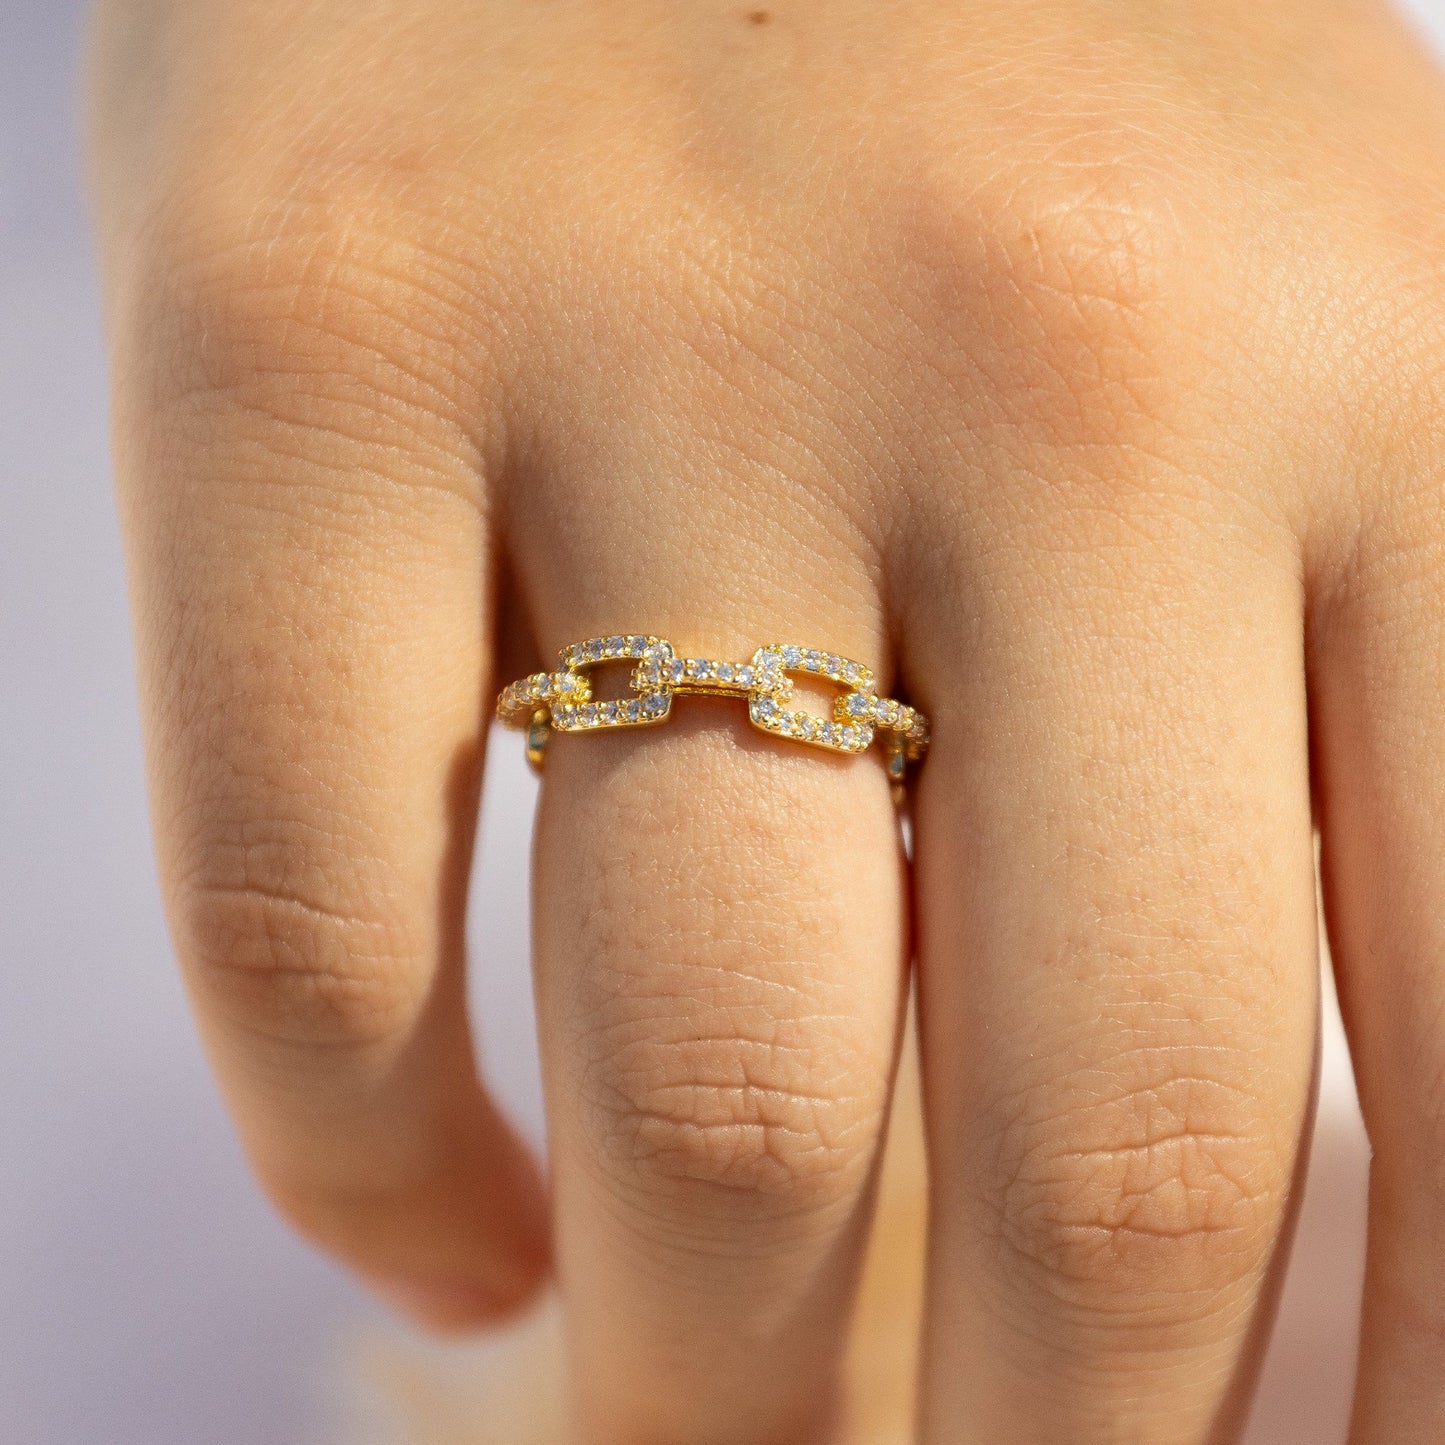 18k vergoldeter Ring Verstellbar - NONOSH